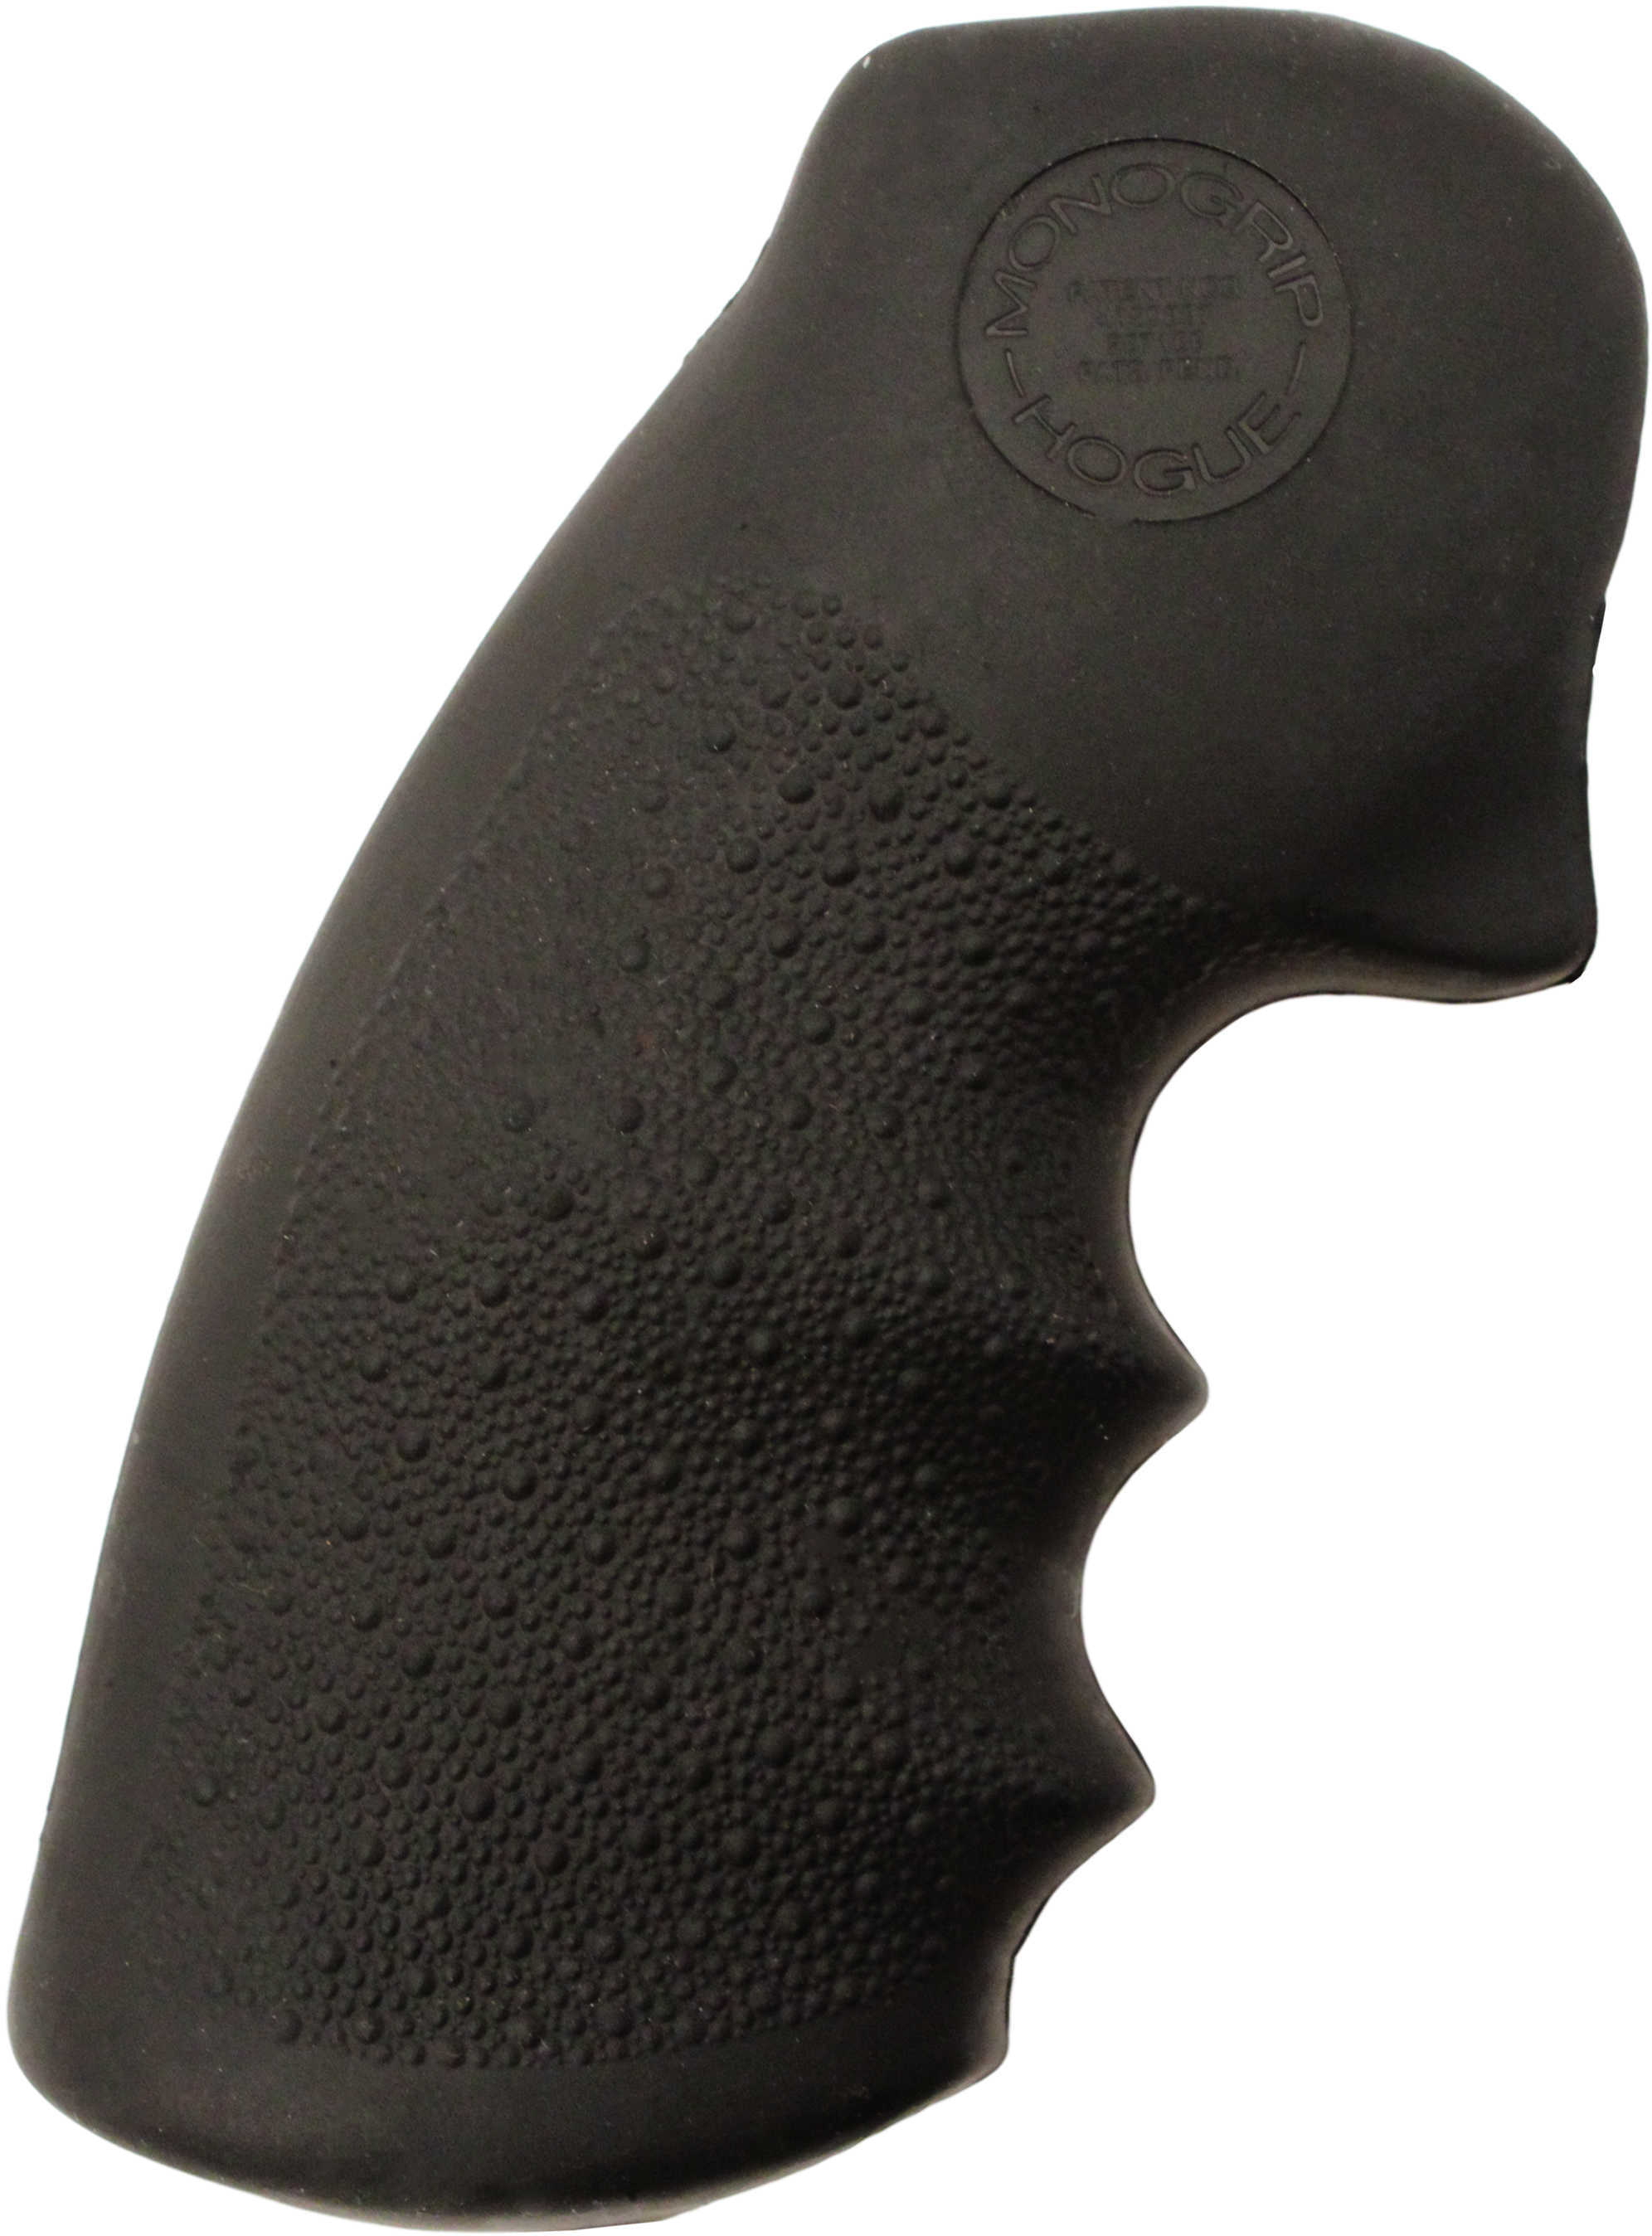 Hogue Grips Rubber Black Colt Python 46000-img-1